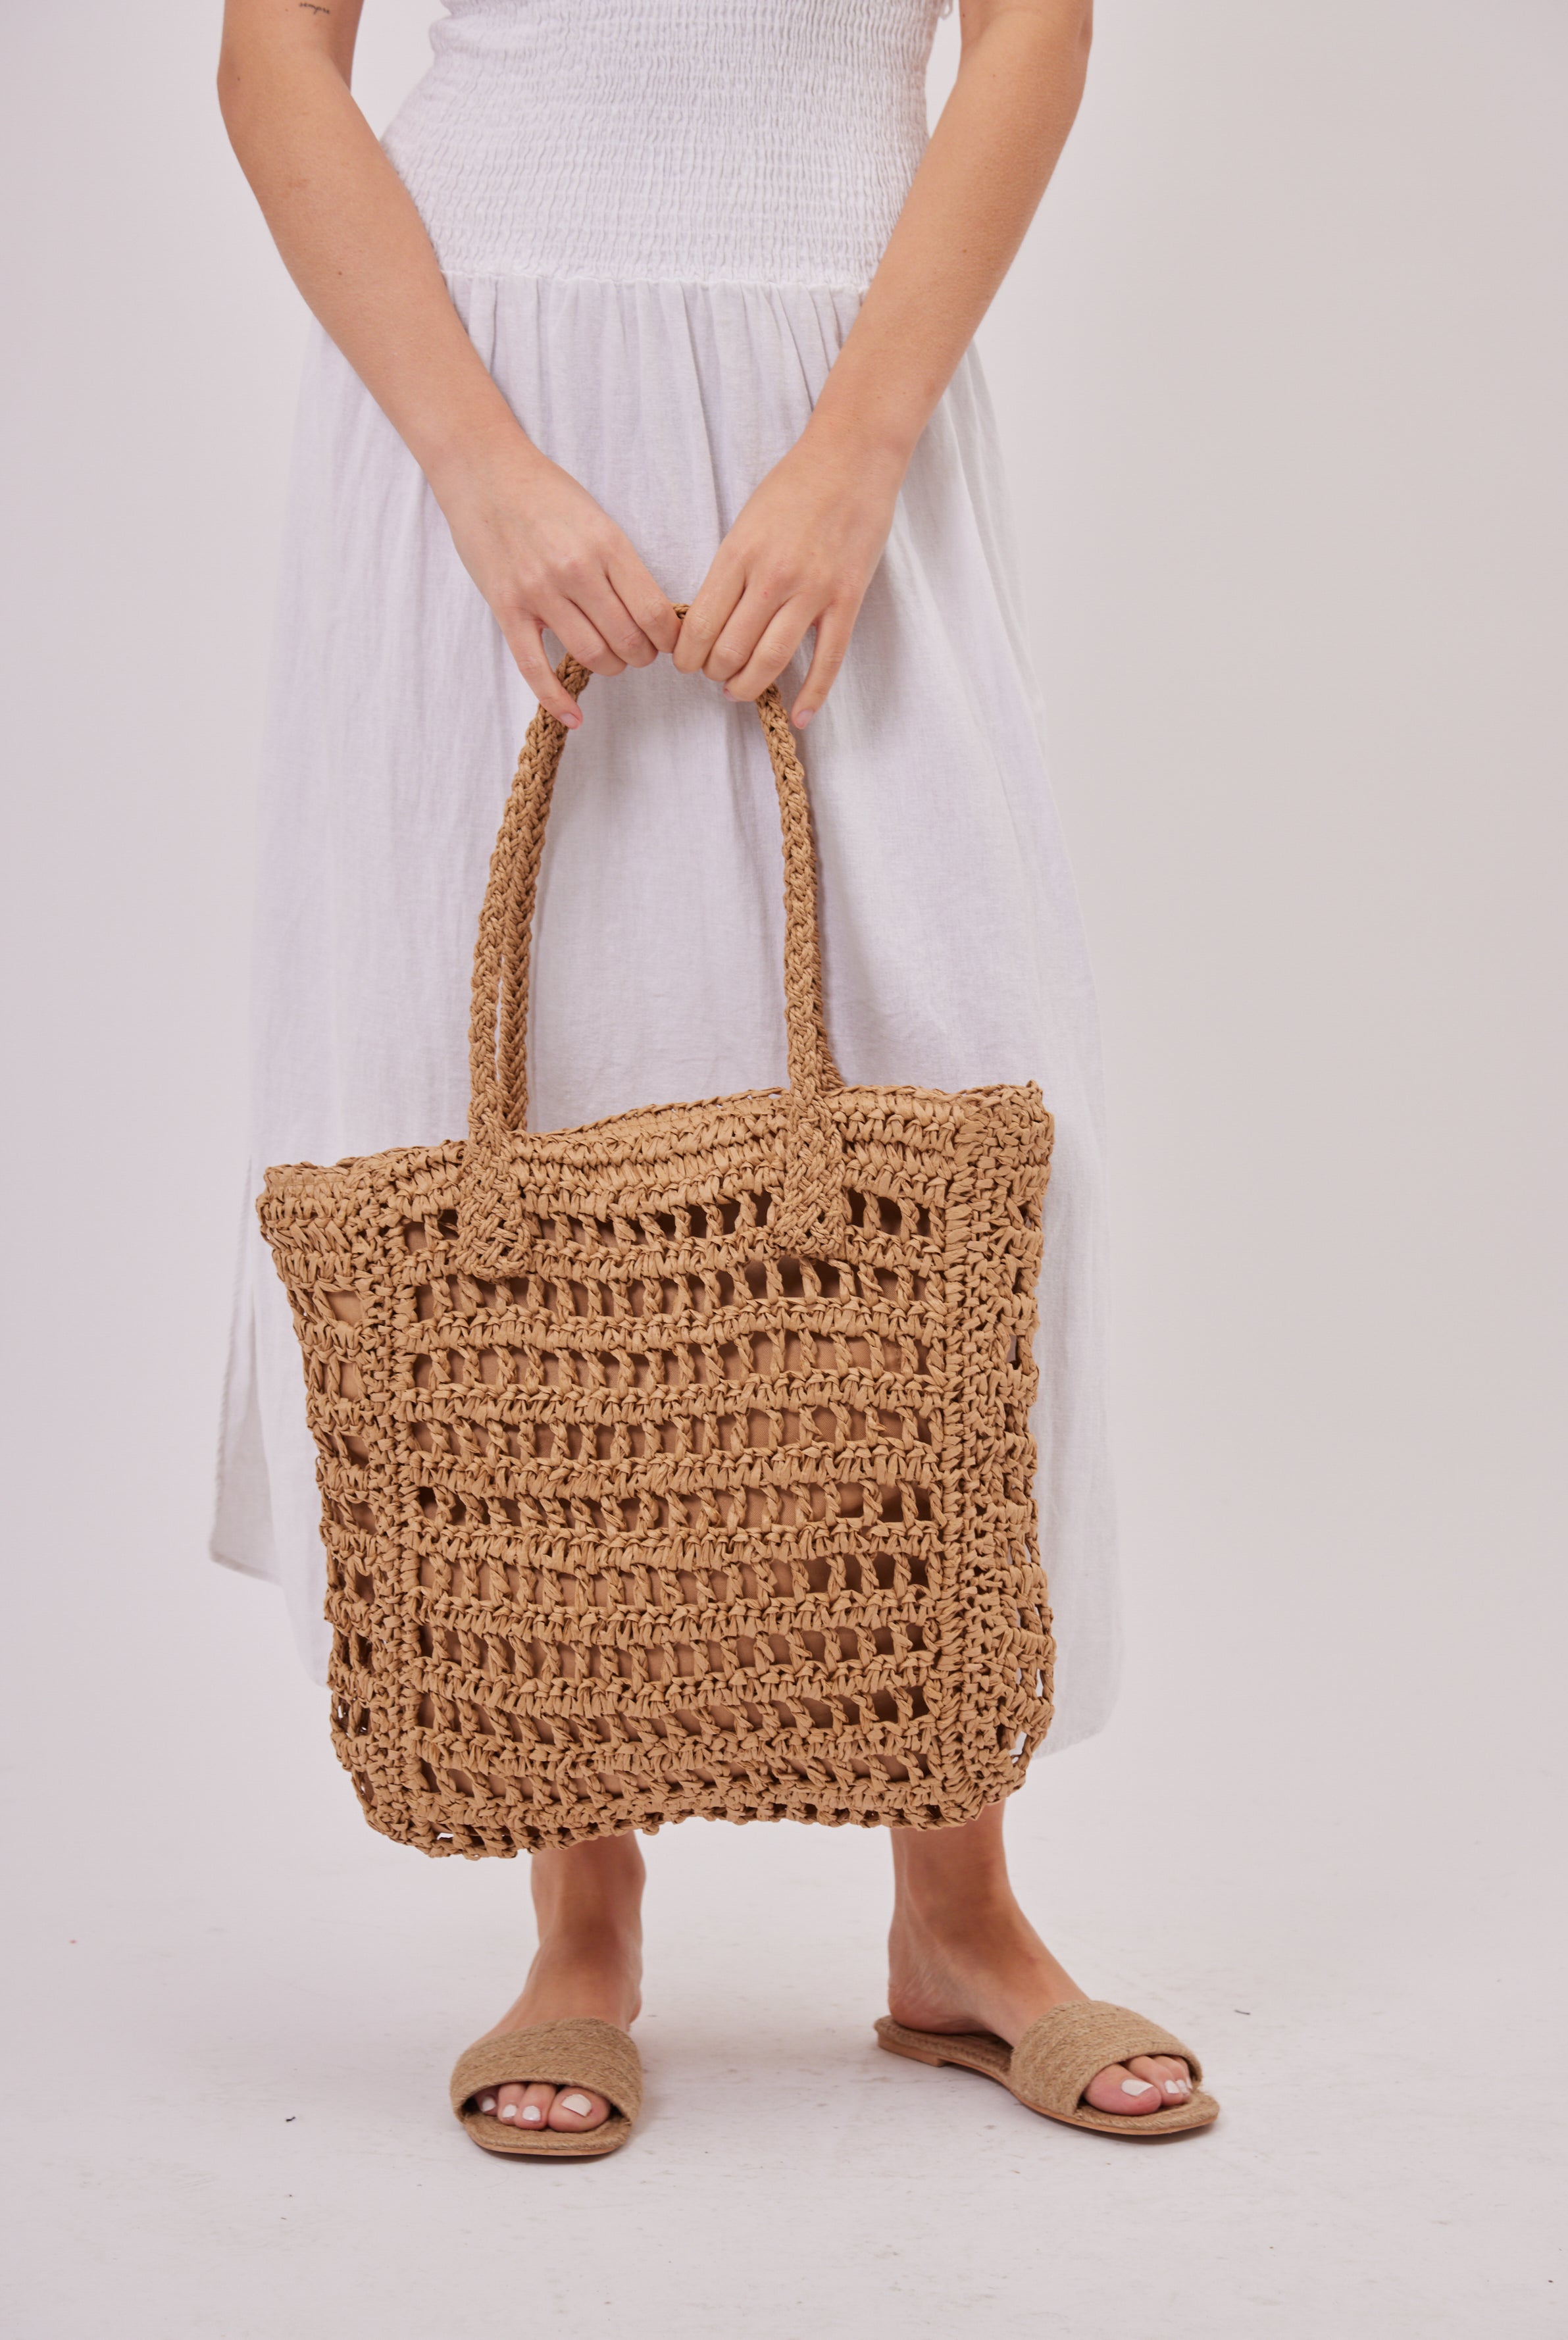 Woven Tote Bag in Beige | Beach Bag | Raffia Bag Holiday bag | Tote | Shopper | Ladies Bag | Summer Bag | Beige Bag